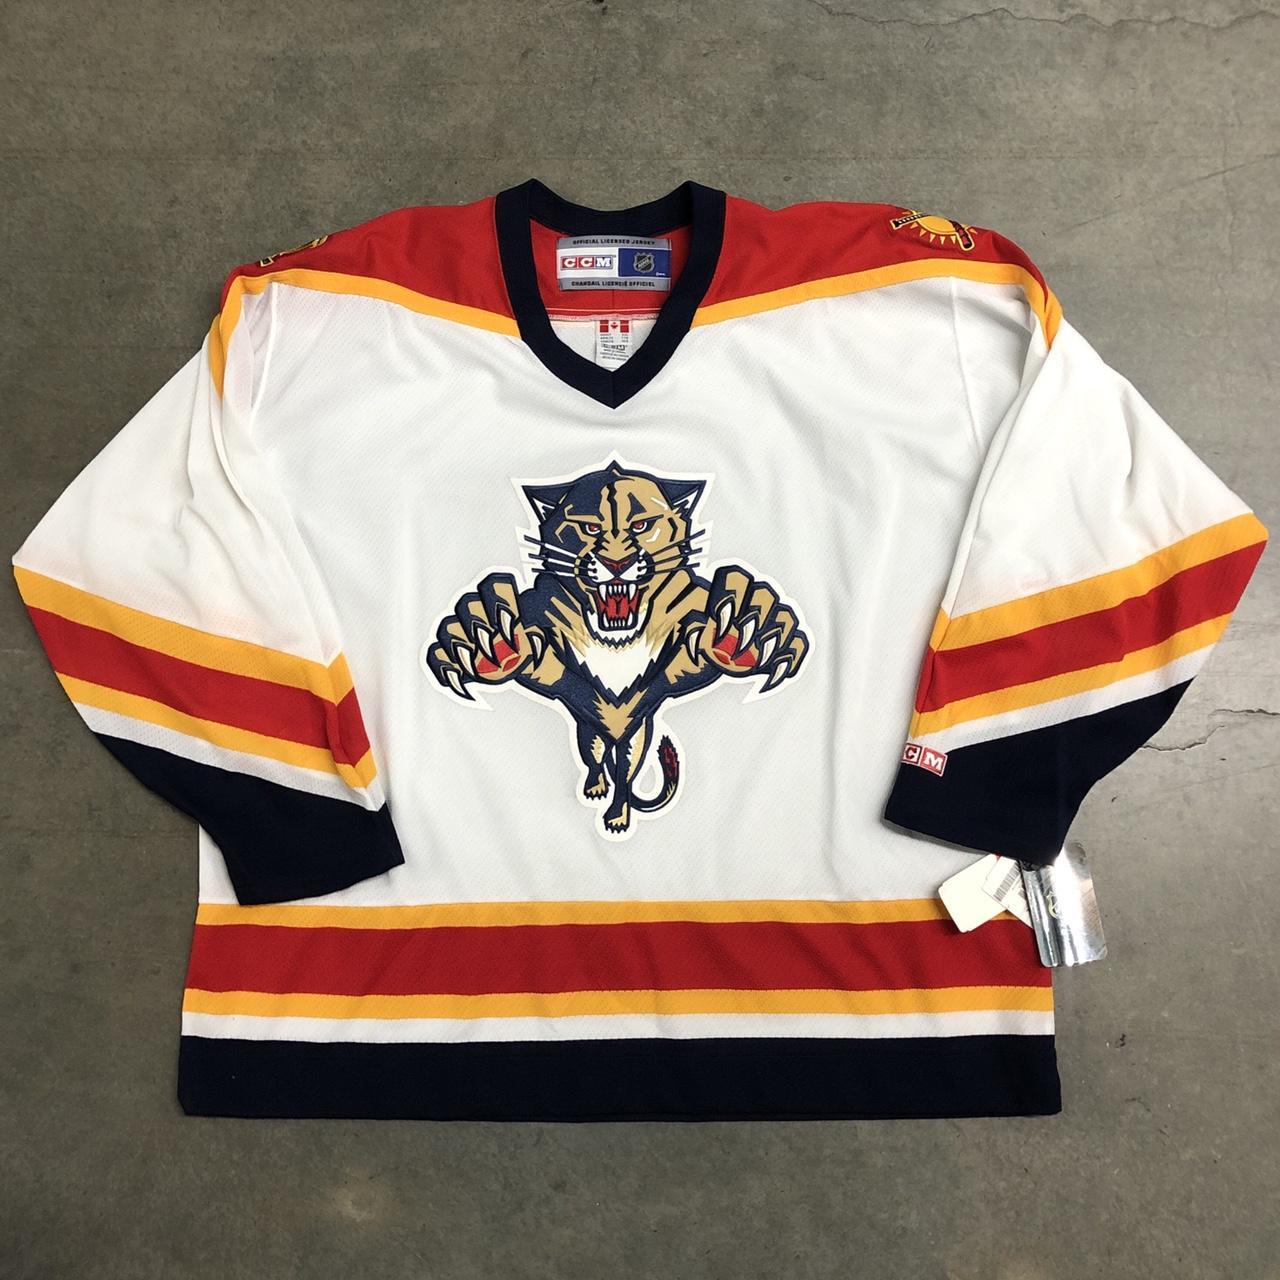 Vintage Panthers Jersey